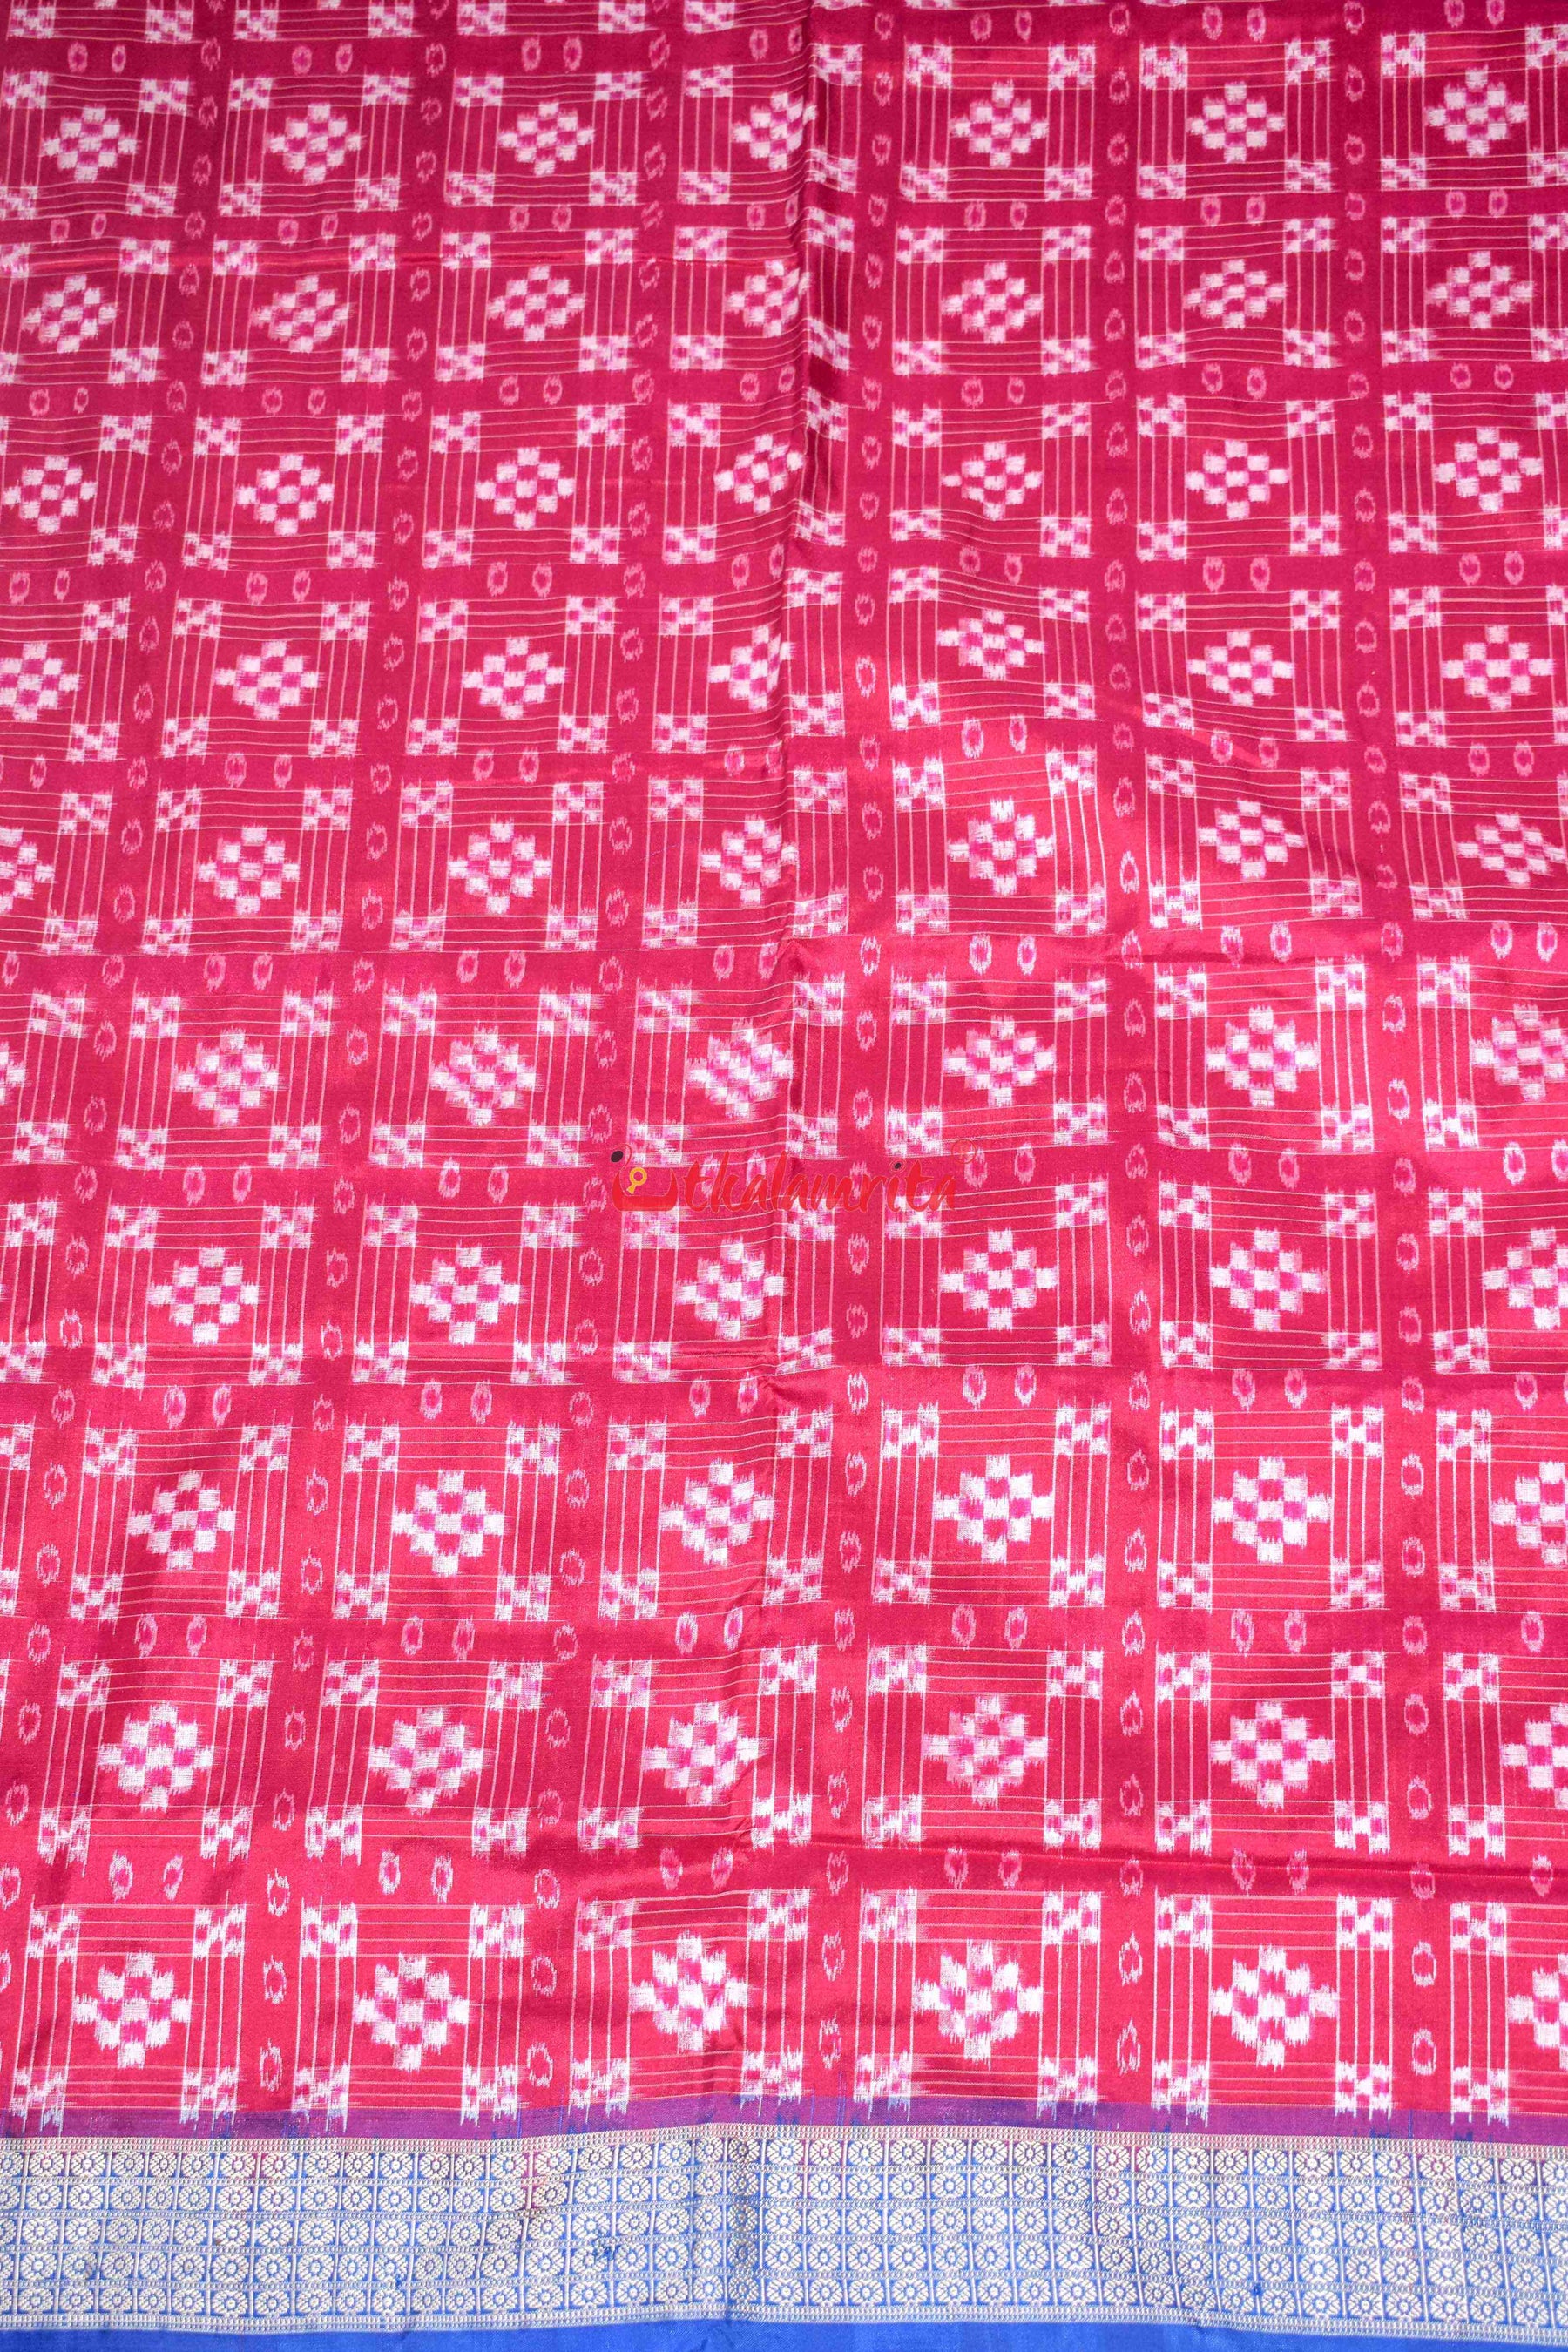 45 Kuthi Pink Pasapali Silk Saree